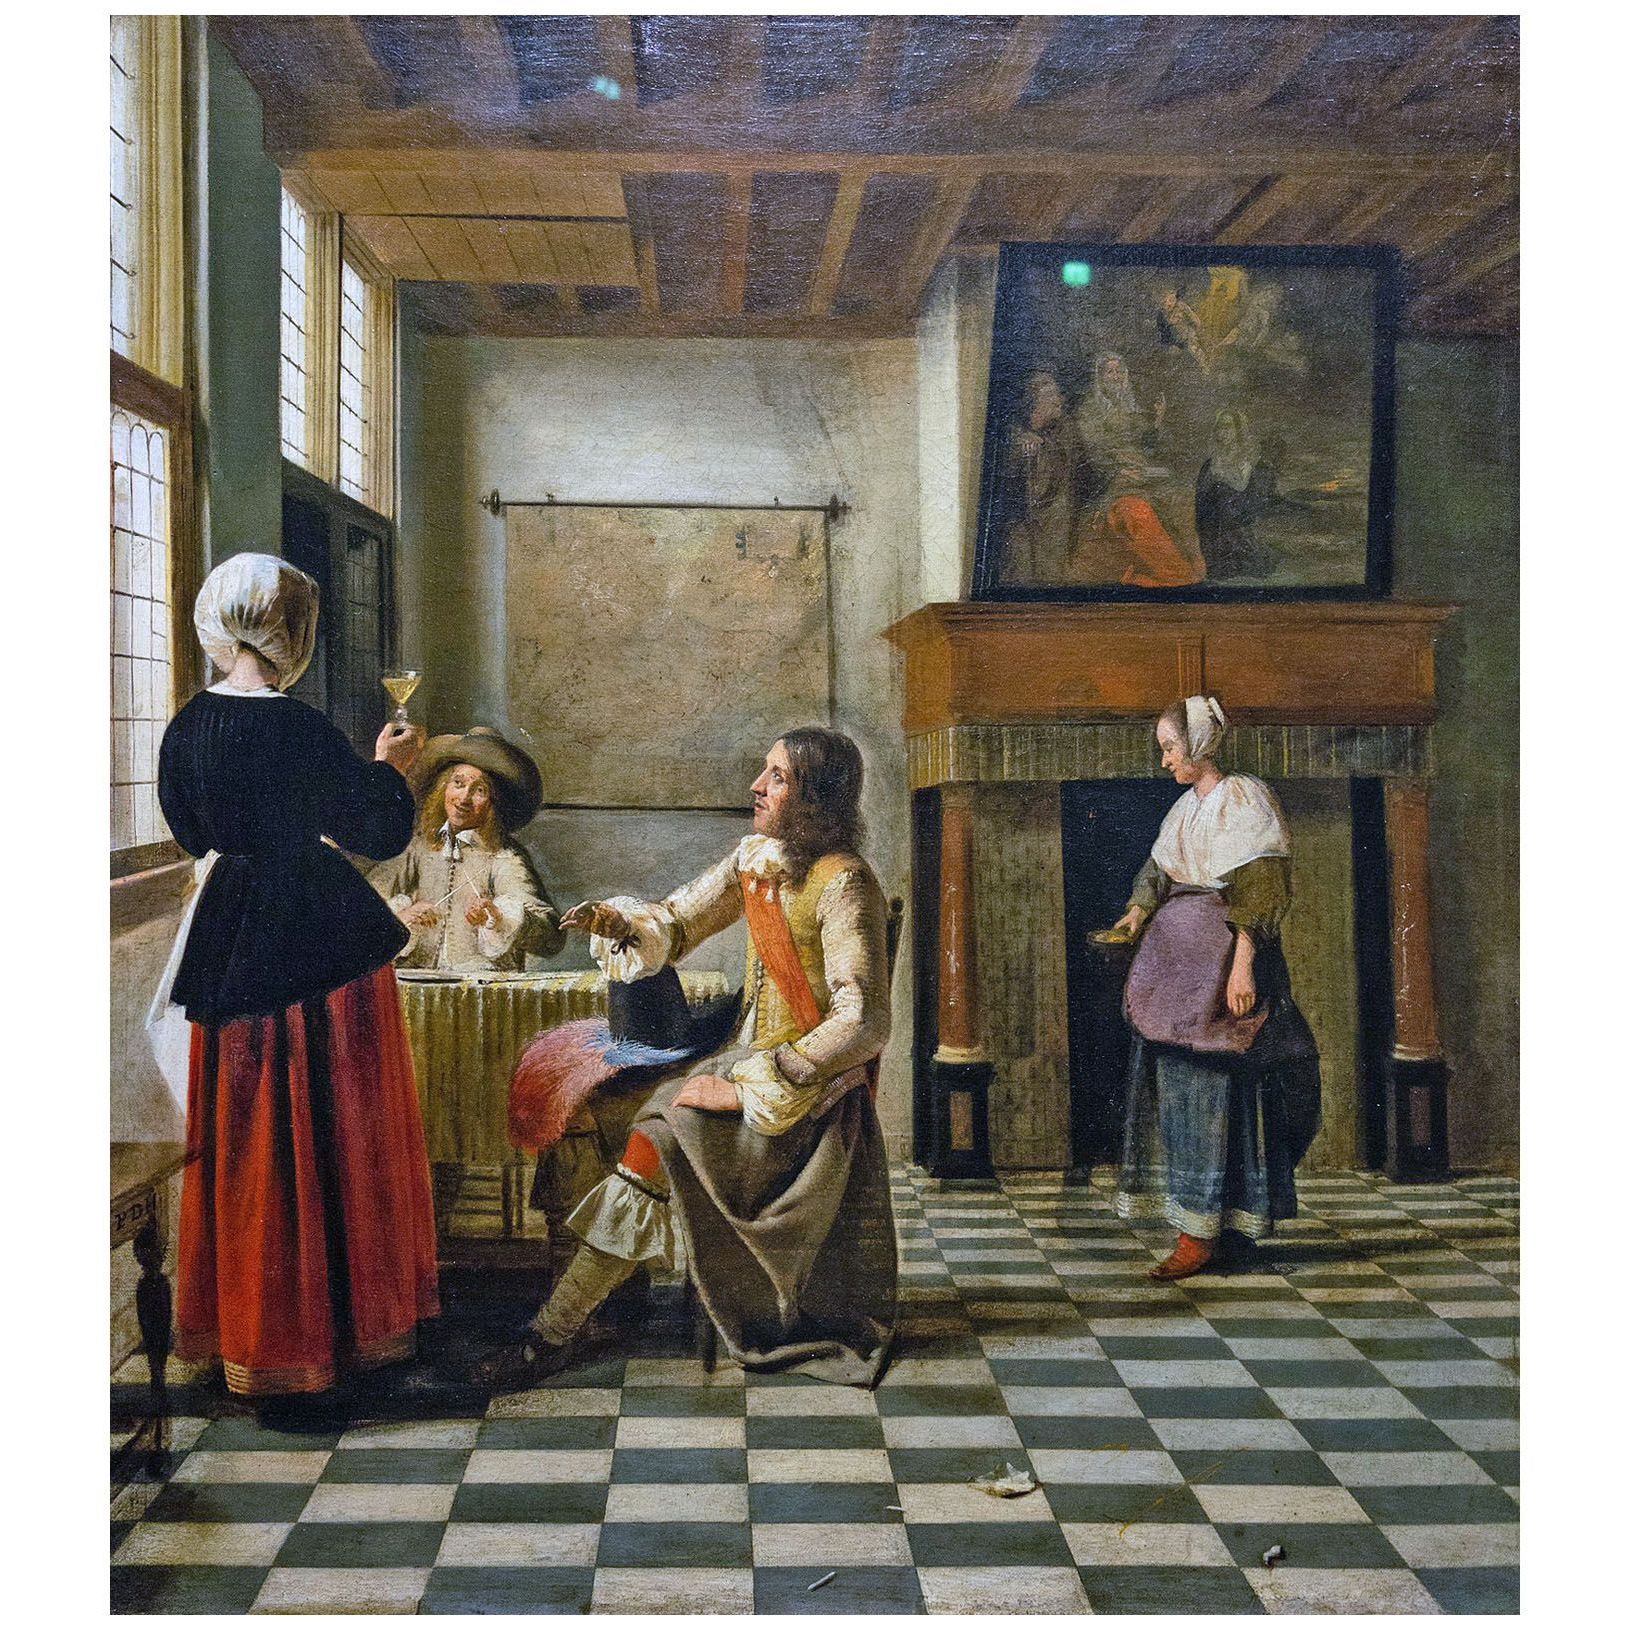 Pieter de Hooch. Woman Drinking with Two Men. 1658. National Gallery London